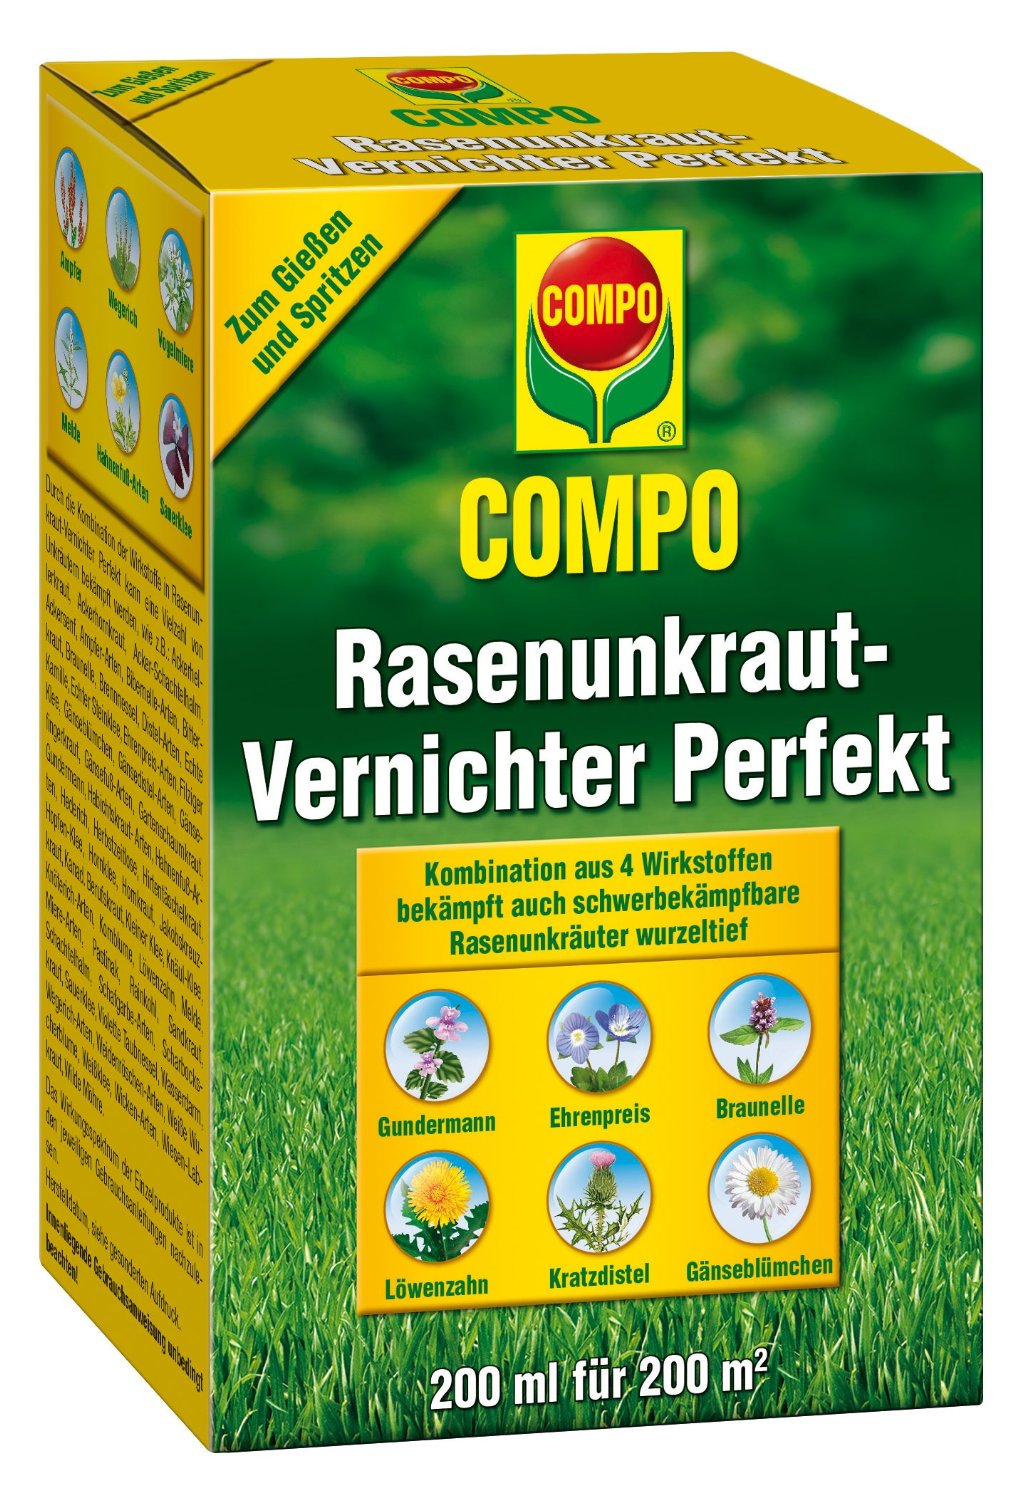 Compo 25389 Rasenunkraut-Vernichter Perfekt gegen schwerbekämpfbare Unkräuter